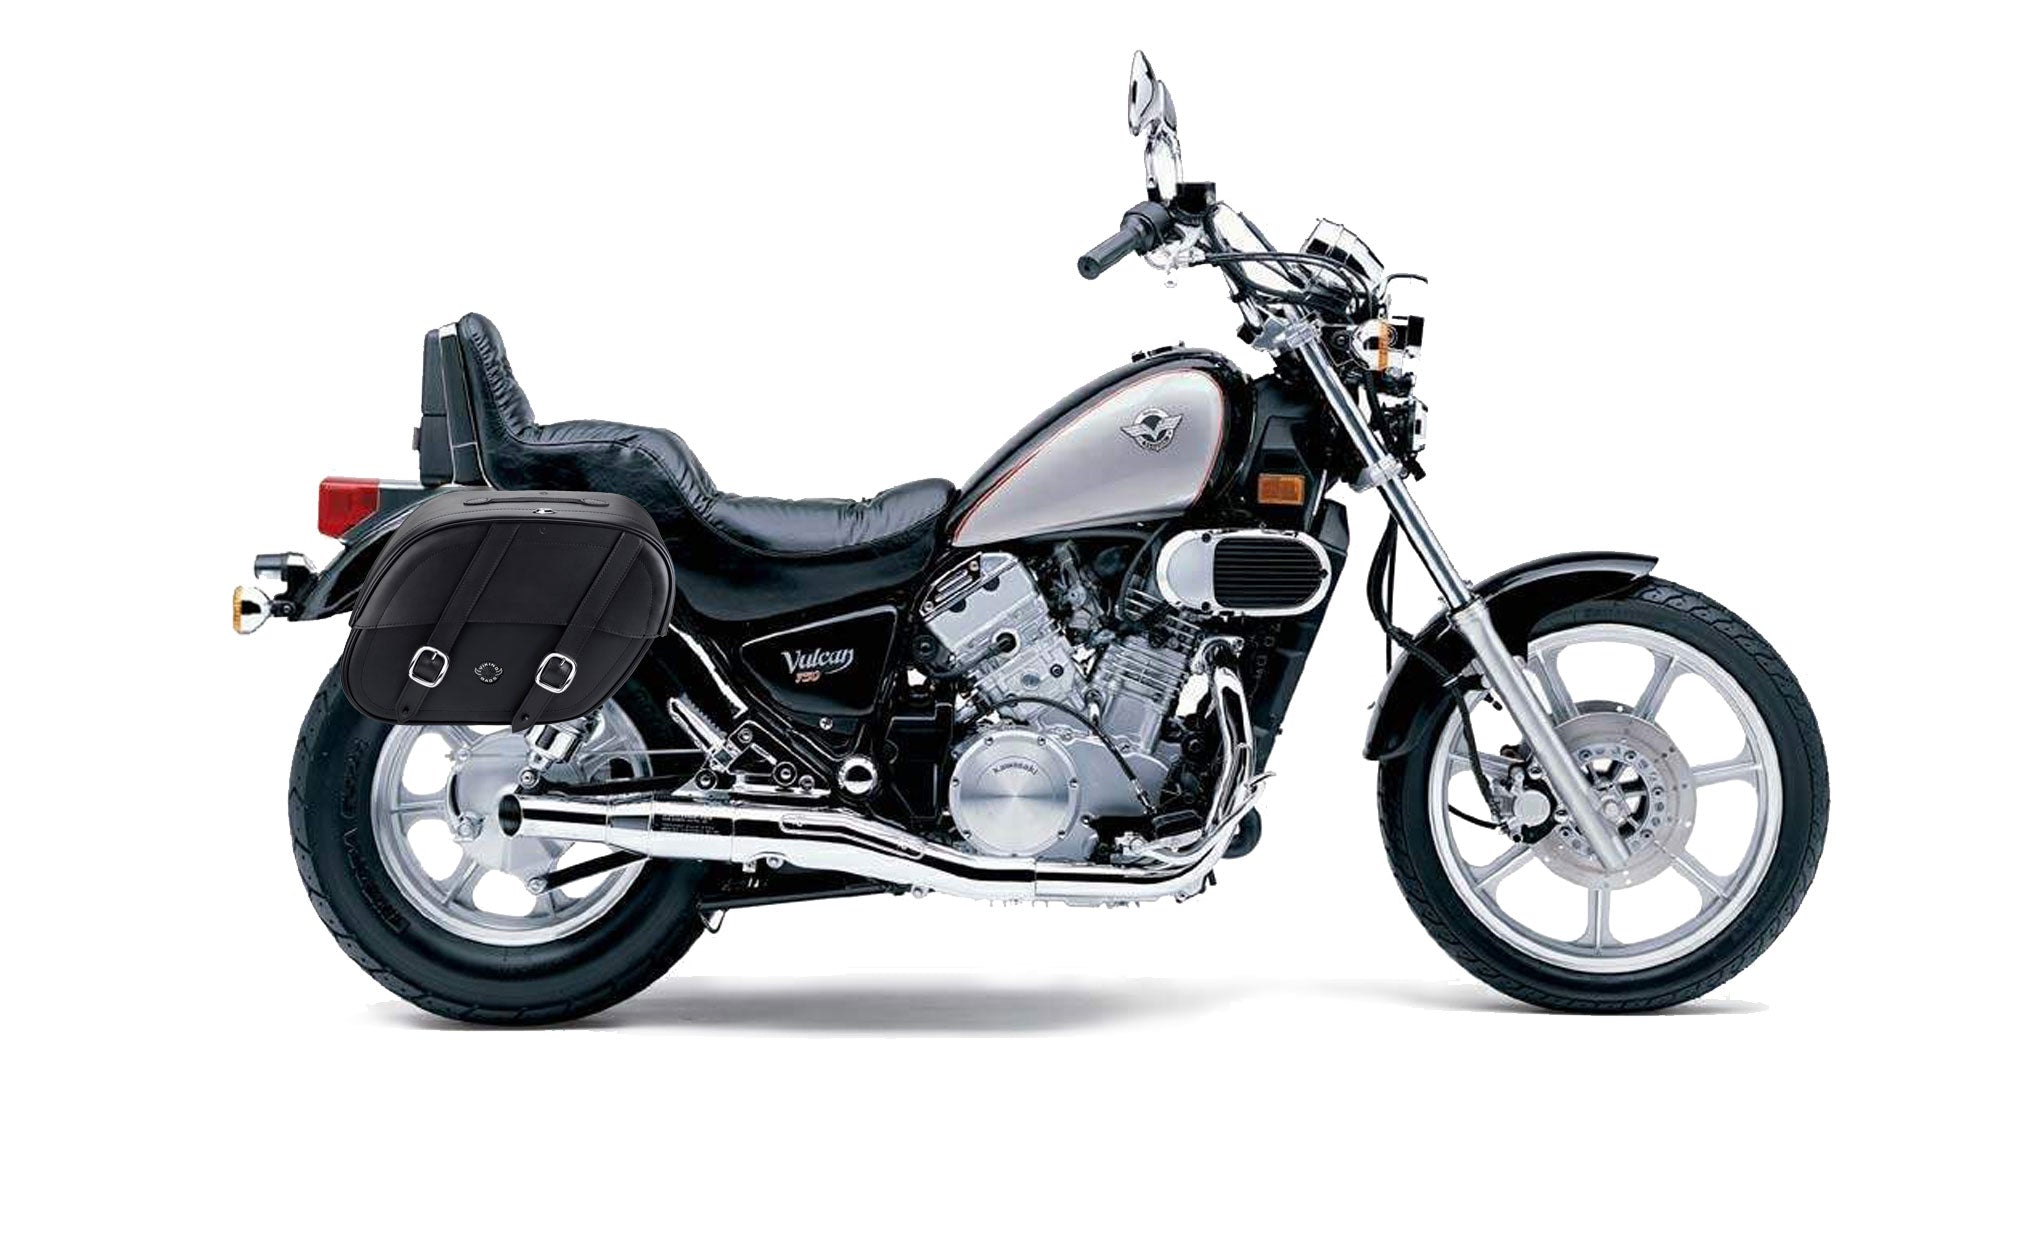 Viking Club Large Kawasaki Vulcan 750 Vn750 Shock Cut Out Leather Motorcycle Saddlebags on Bike Photo @expand